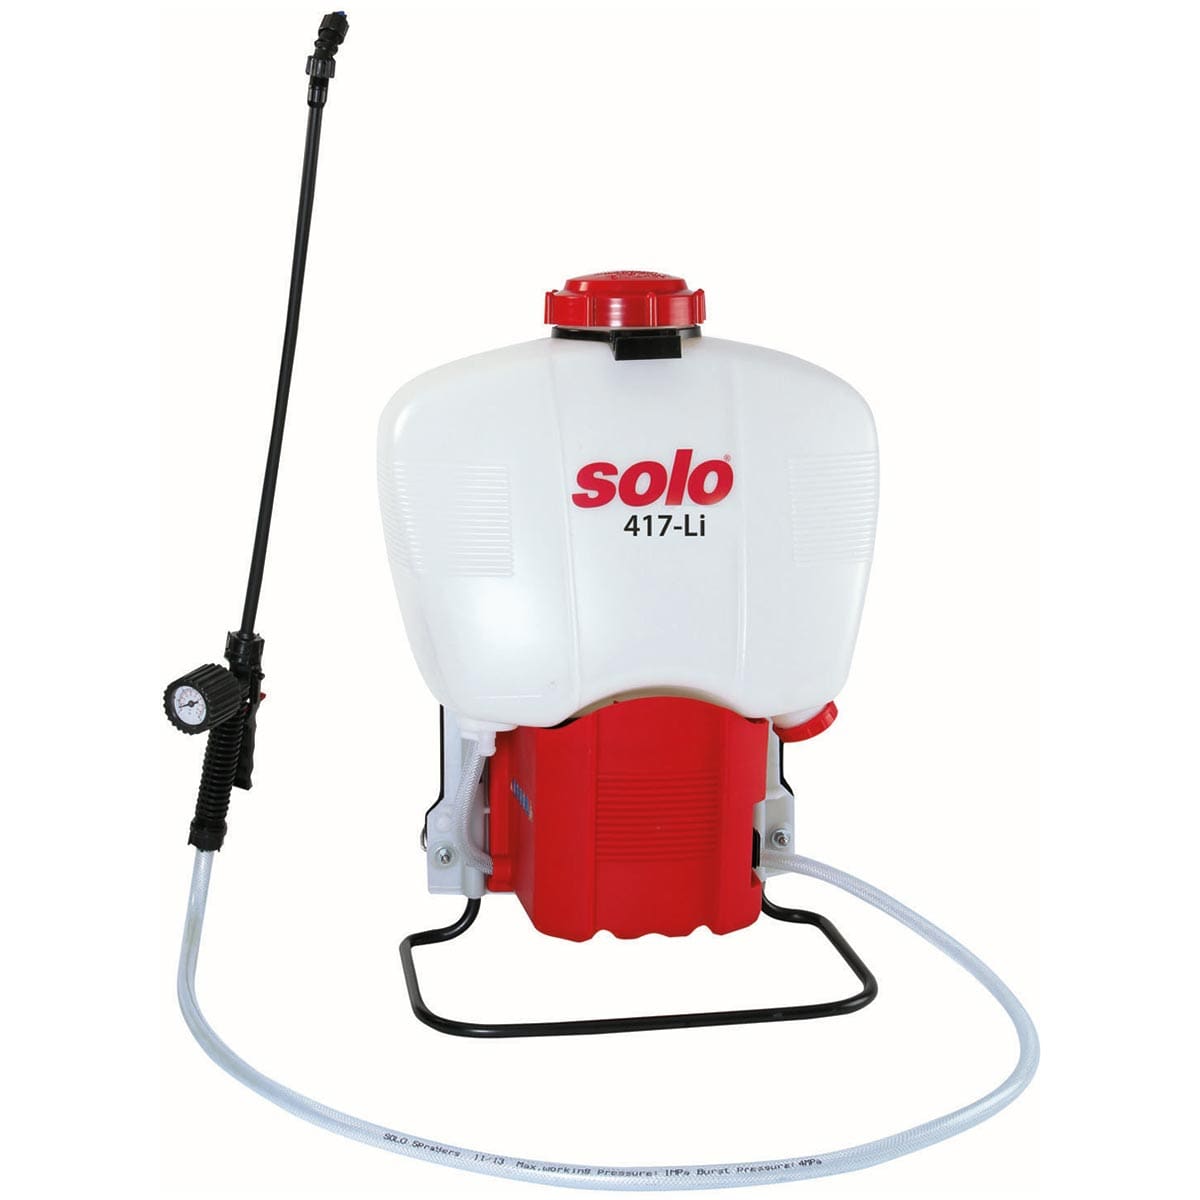 Solo 417-Li 4.5 gal Battery-Powered Backpack Sprayer